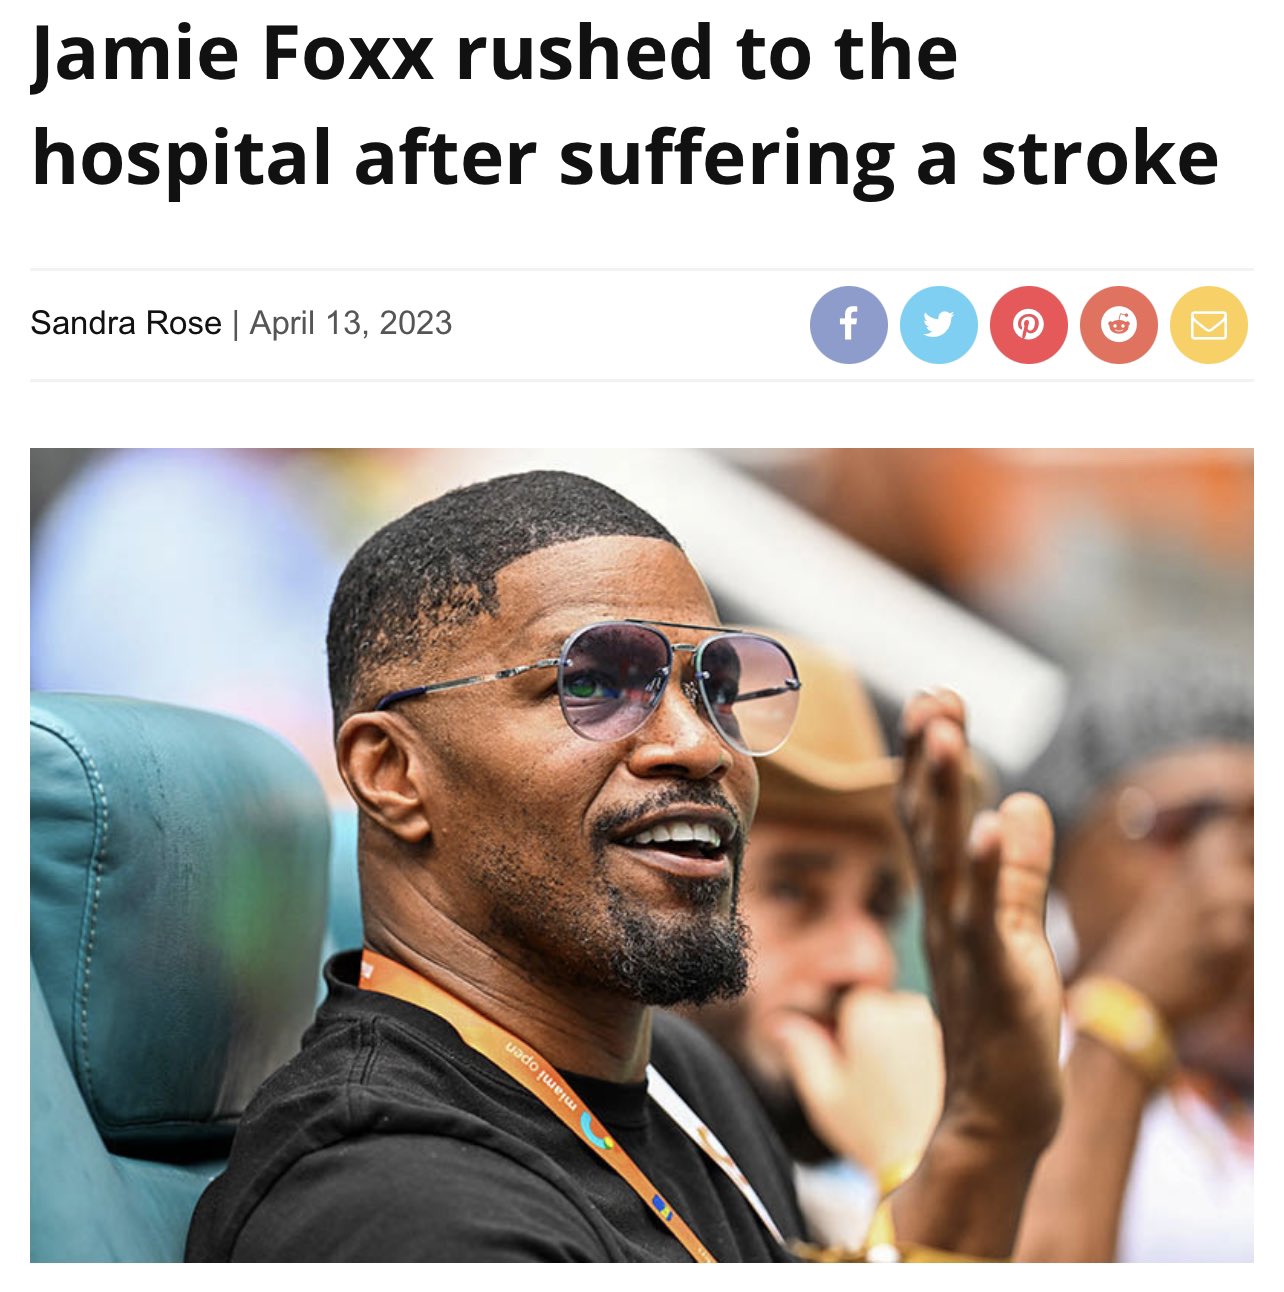 Jamie Foxx vaccine injury